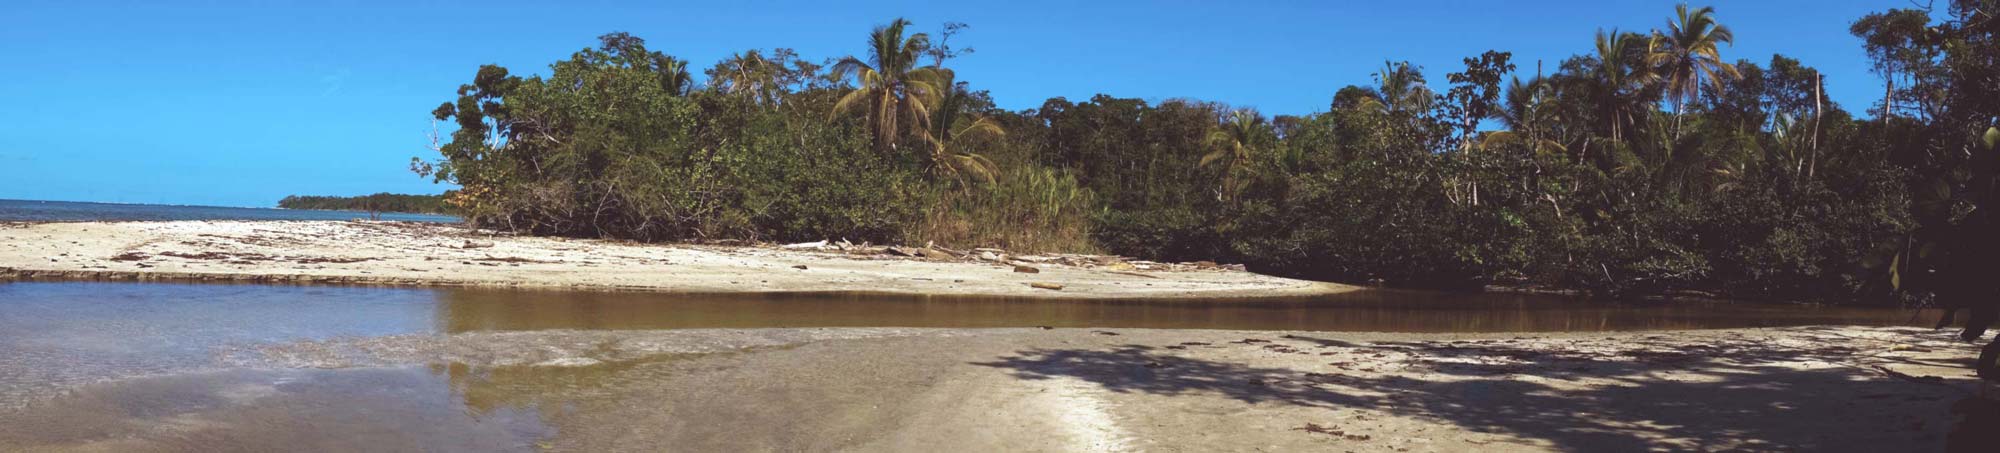 Nationalpark Cahuita in Costa Rica